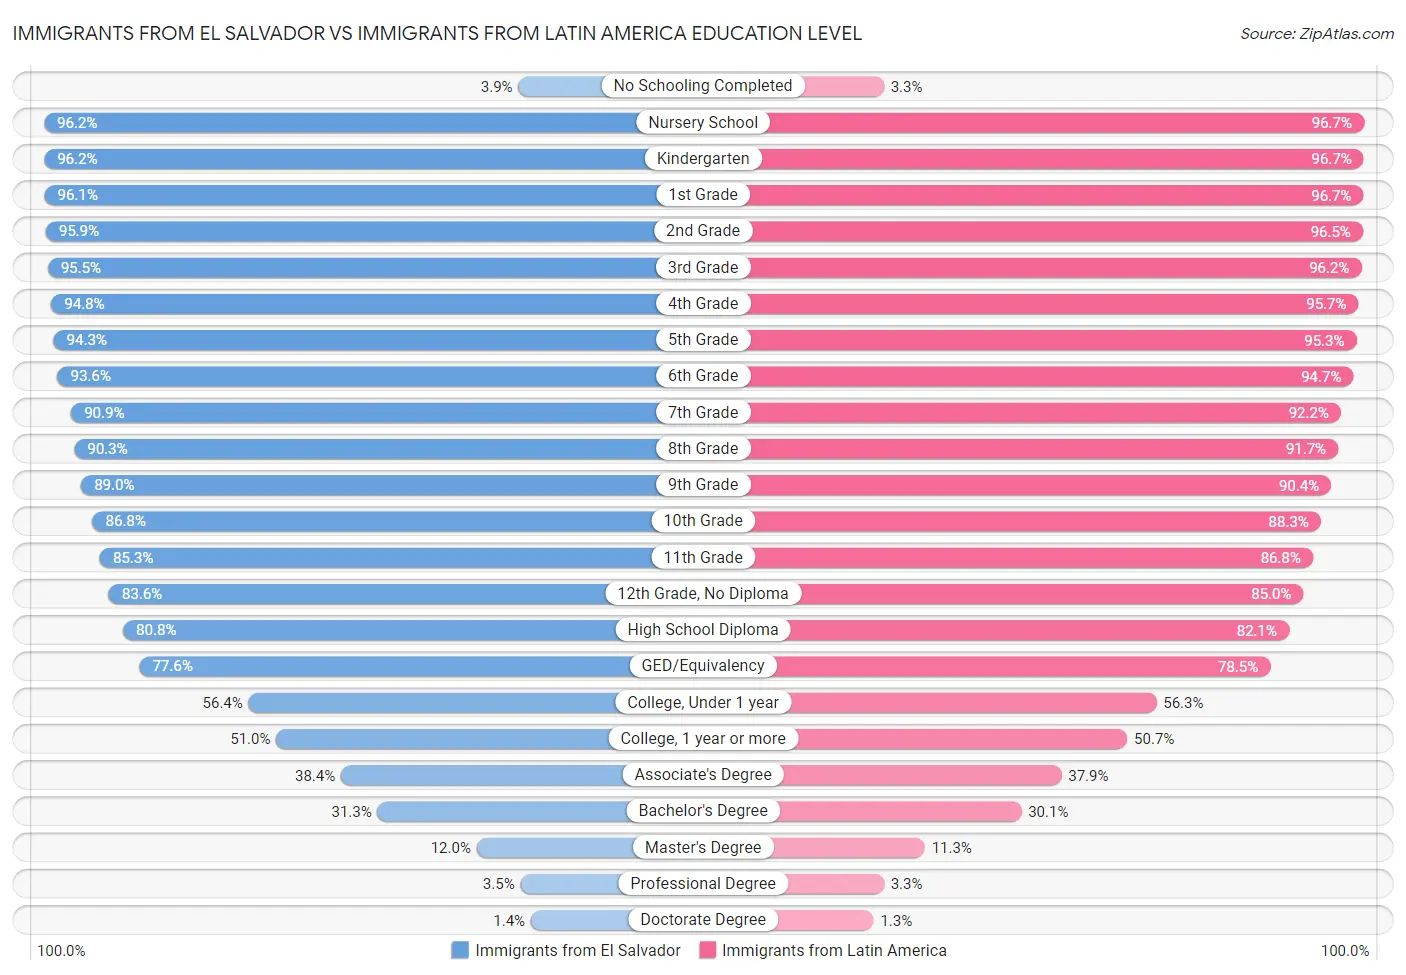 Immigrants from El Salvador vs Immigrants from Latin America Education Level